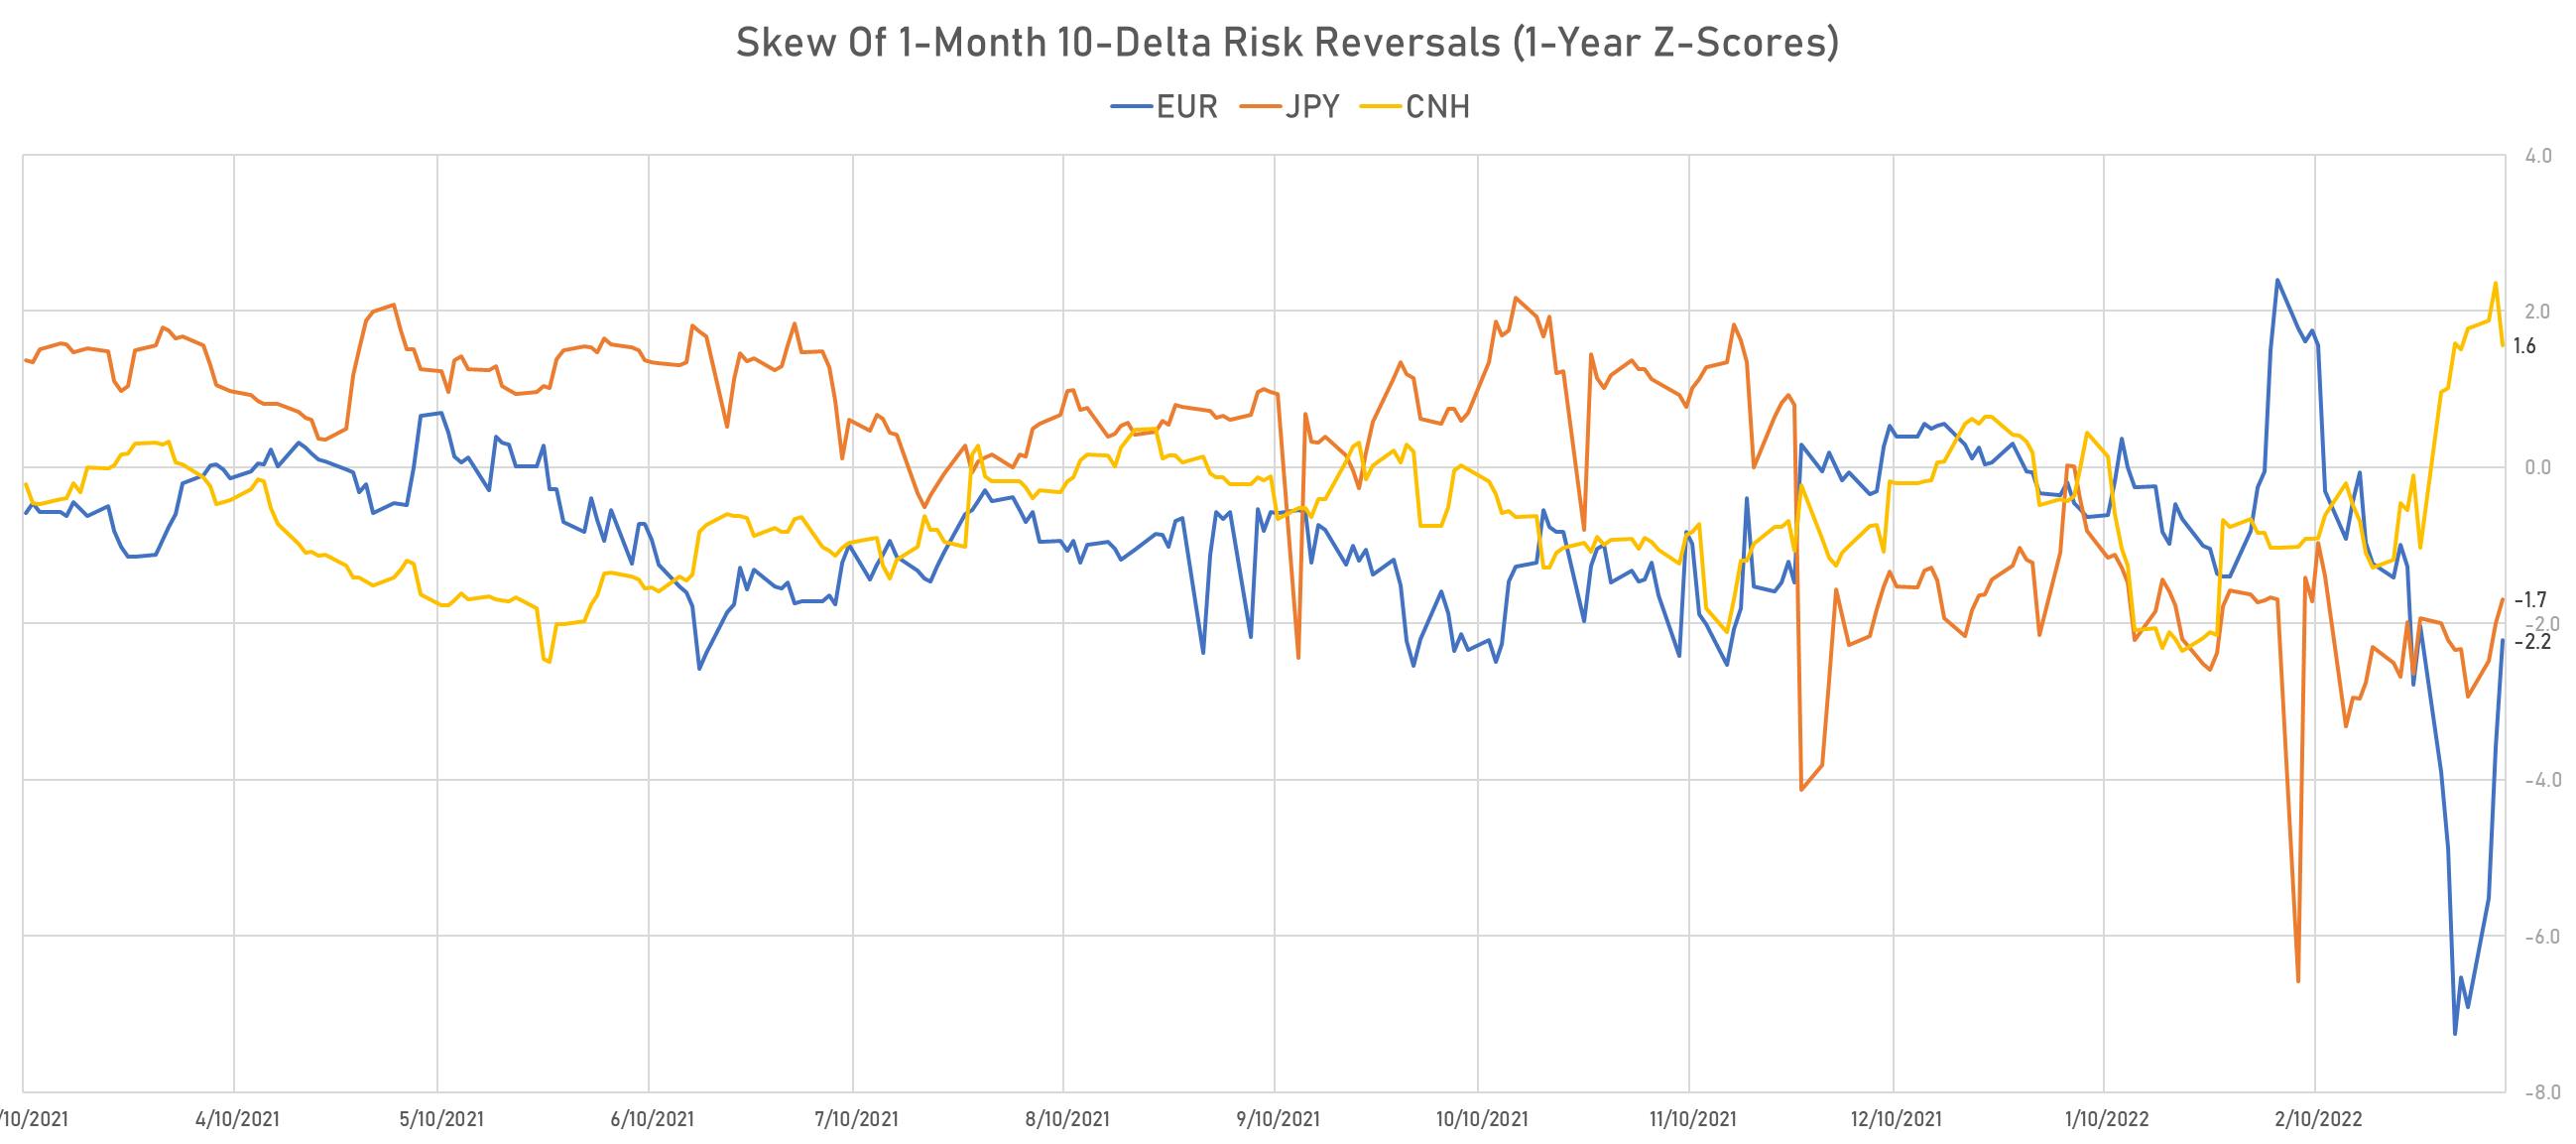 Euro, CNH, JPY Skews In 1-Month 10-Delta Risk Reversals | Sources: phipost.com, Refinitiv data